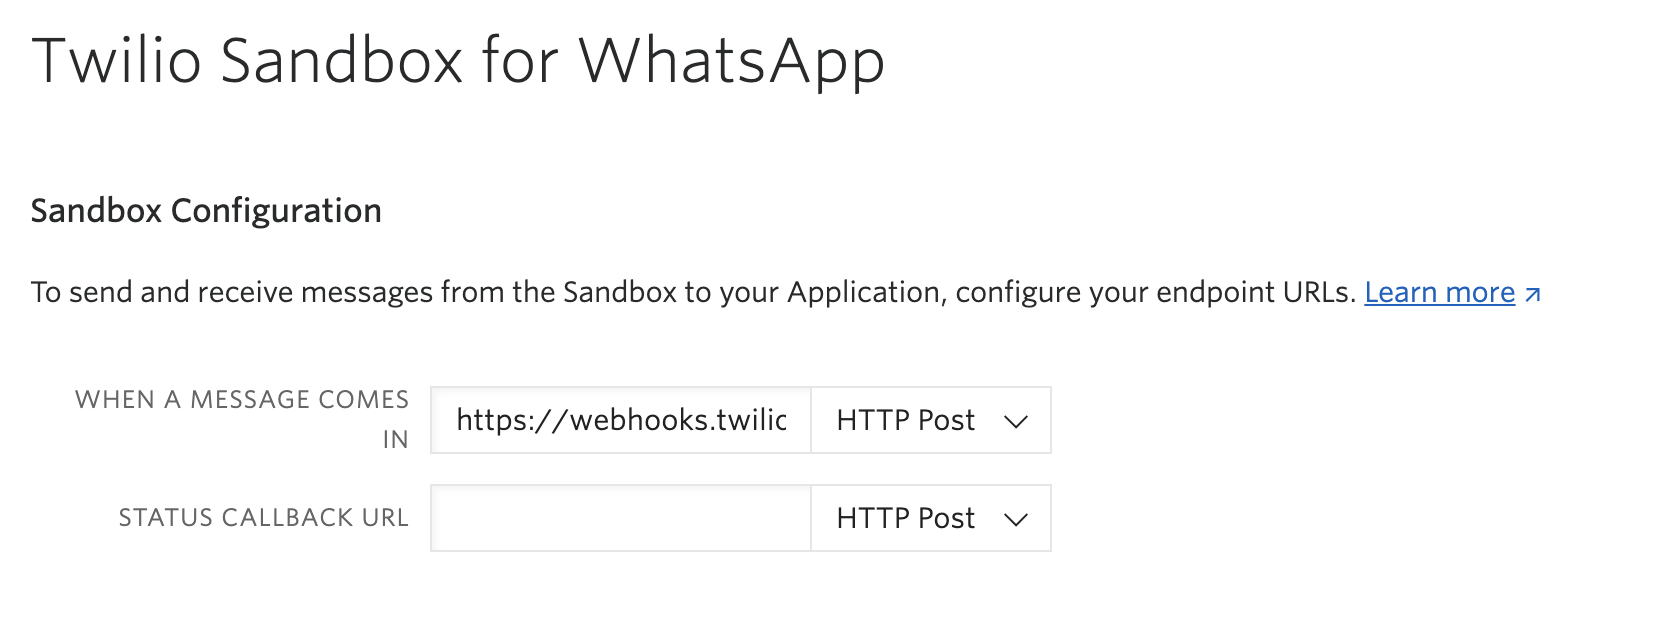 Setting a webhook in the Twilio Sandbox for WhatsApp